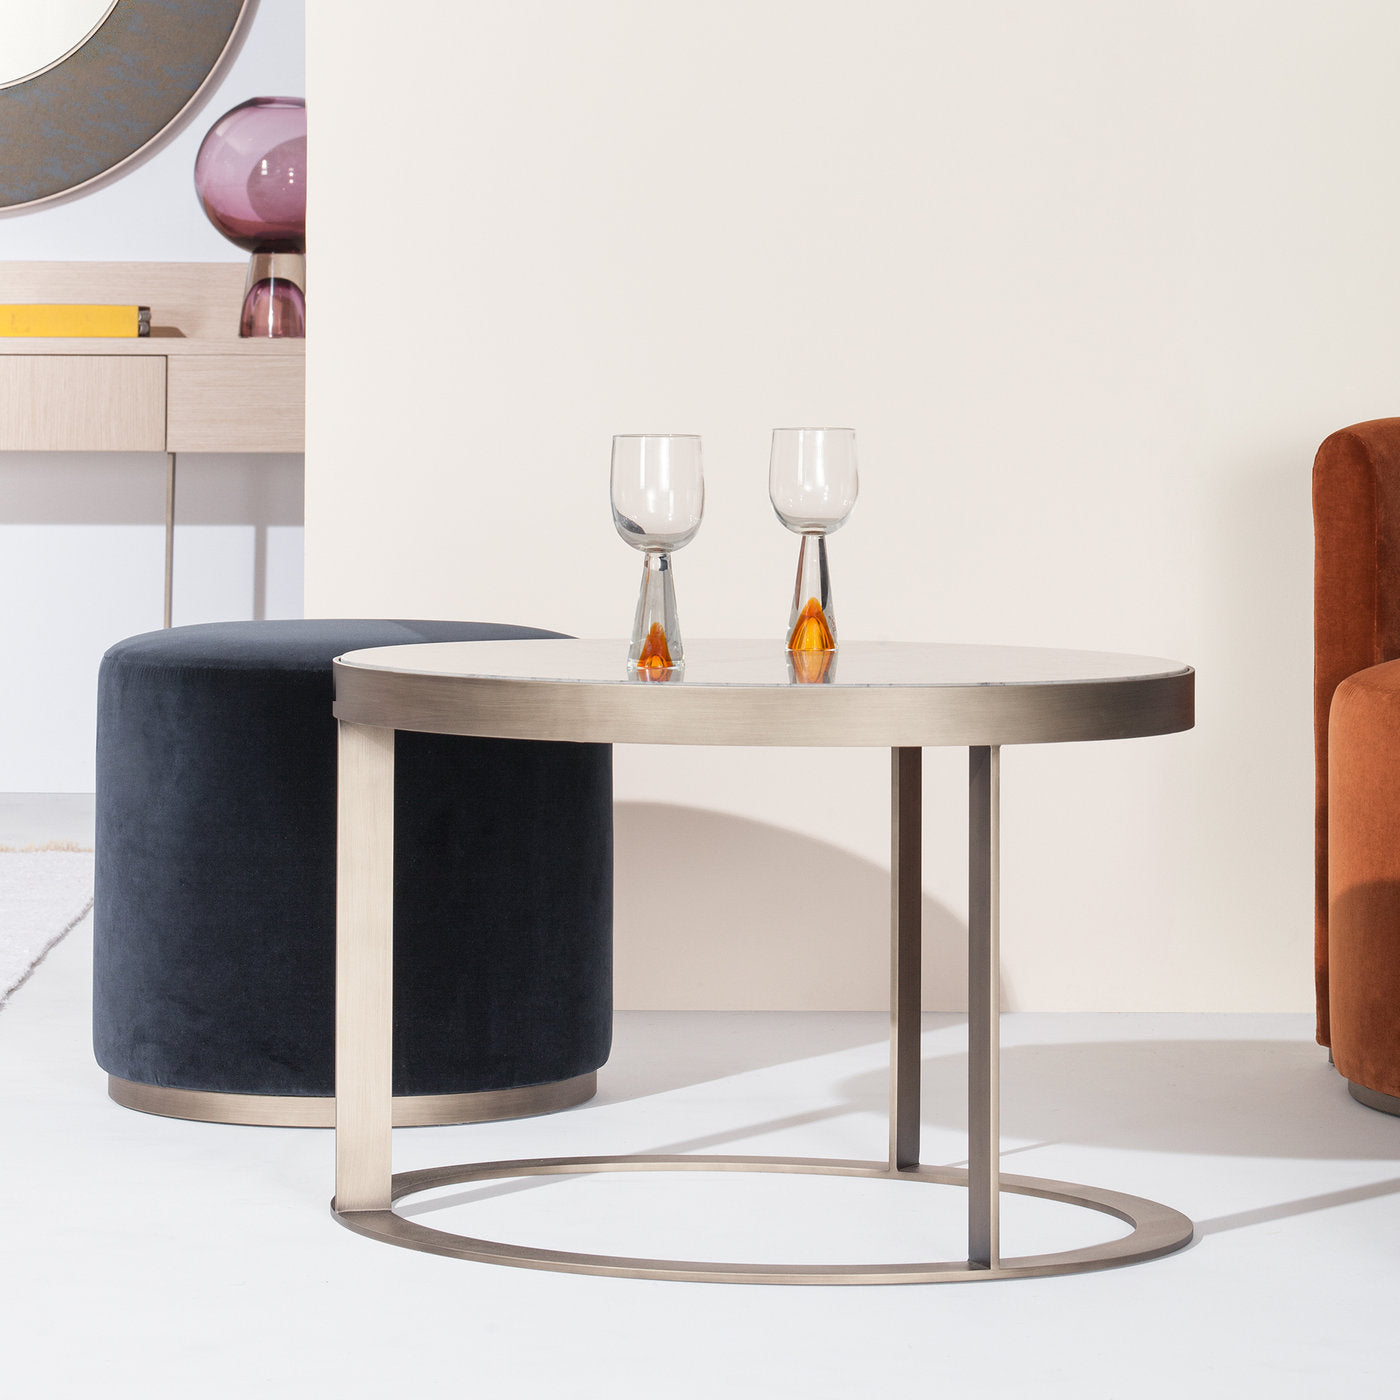 Alfio Gold Small Coffee Table by Ciarmoli Queda Studio - Alternative view 5